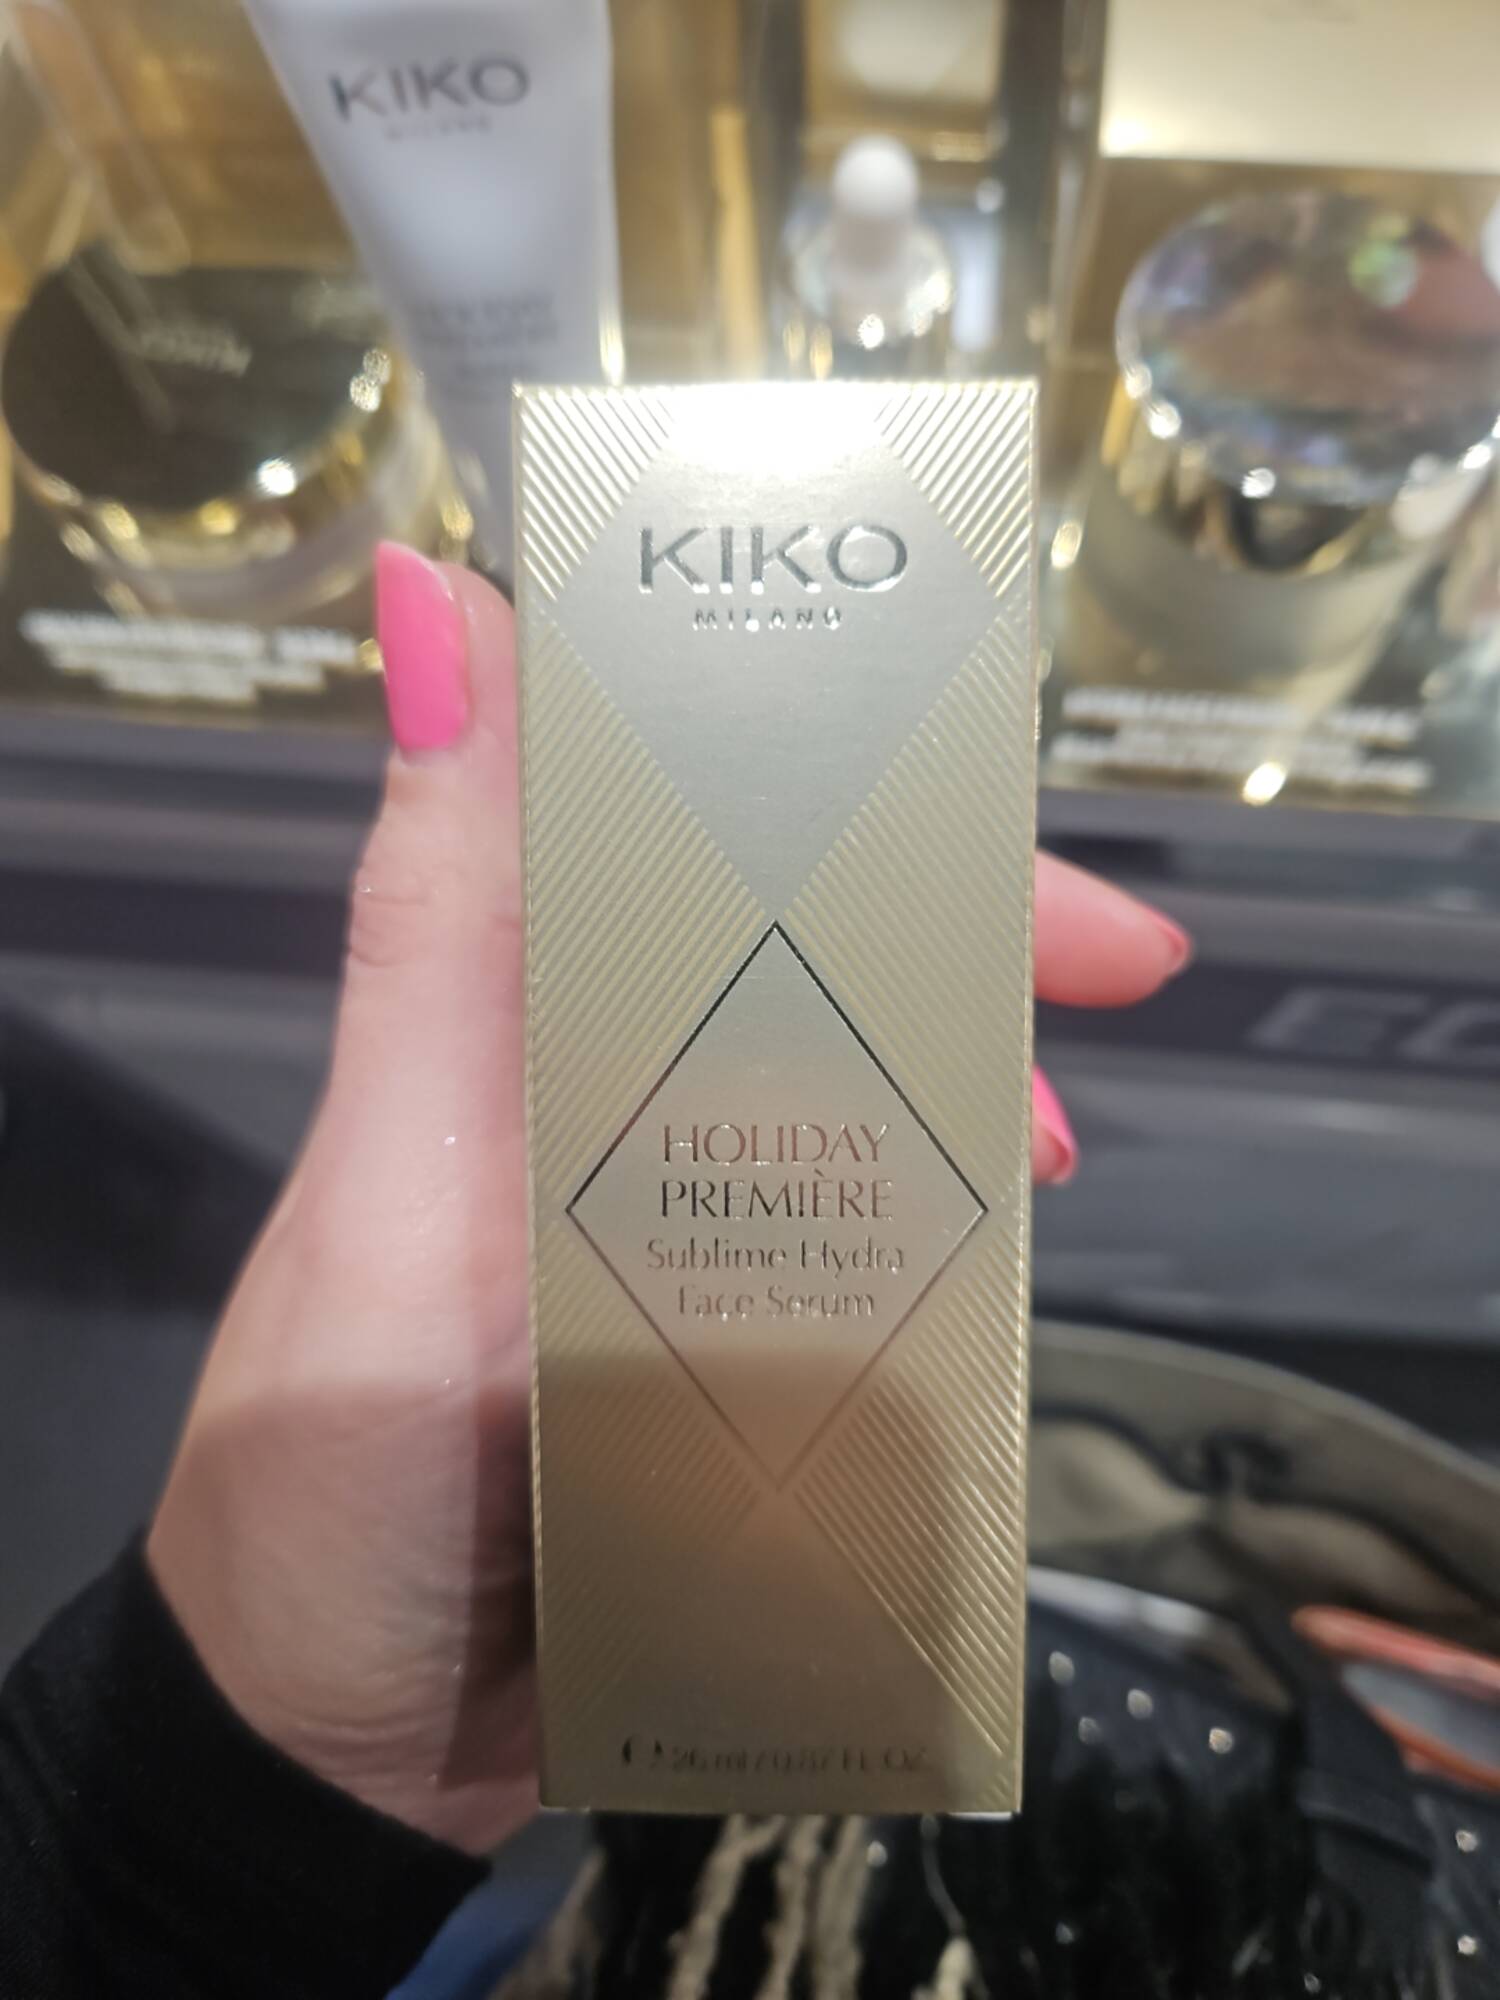 KIKO - Holiday première - Hydra face serum